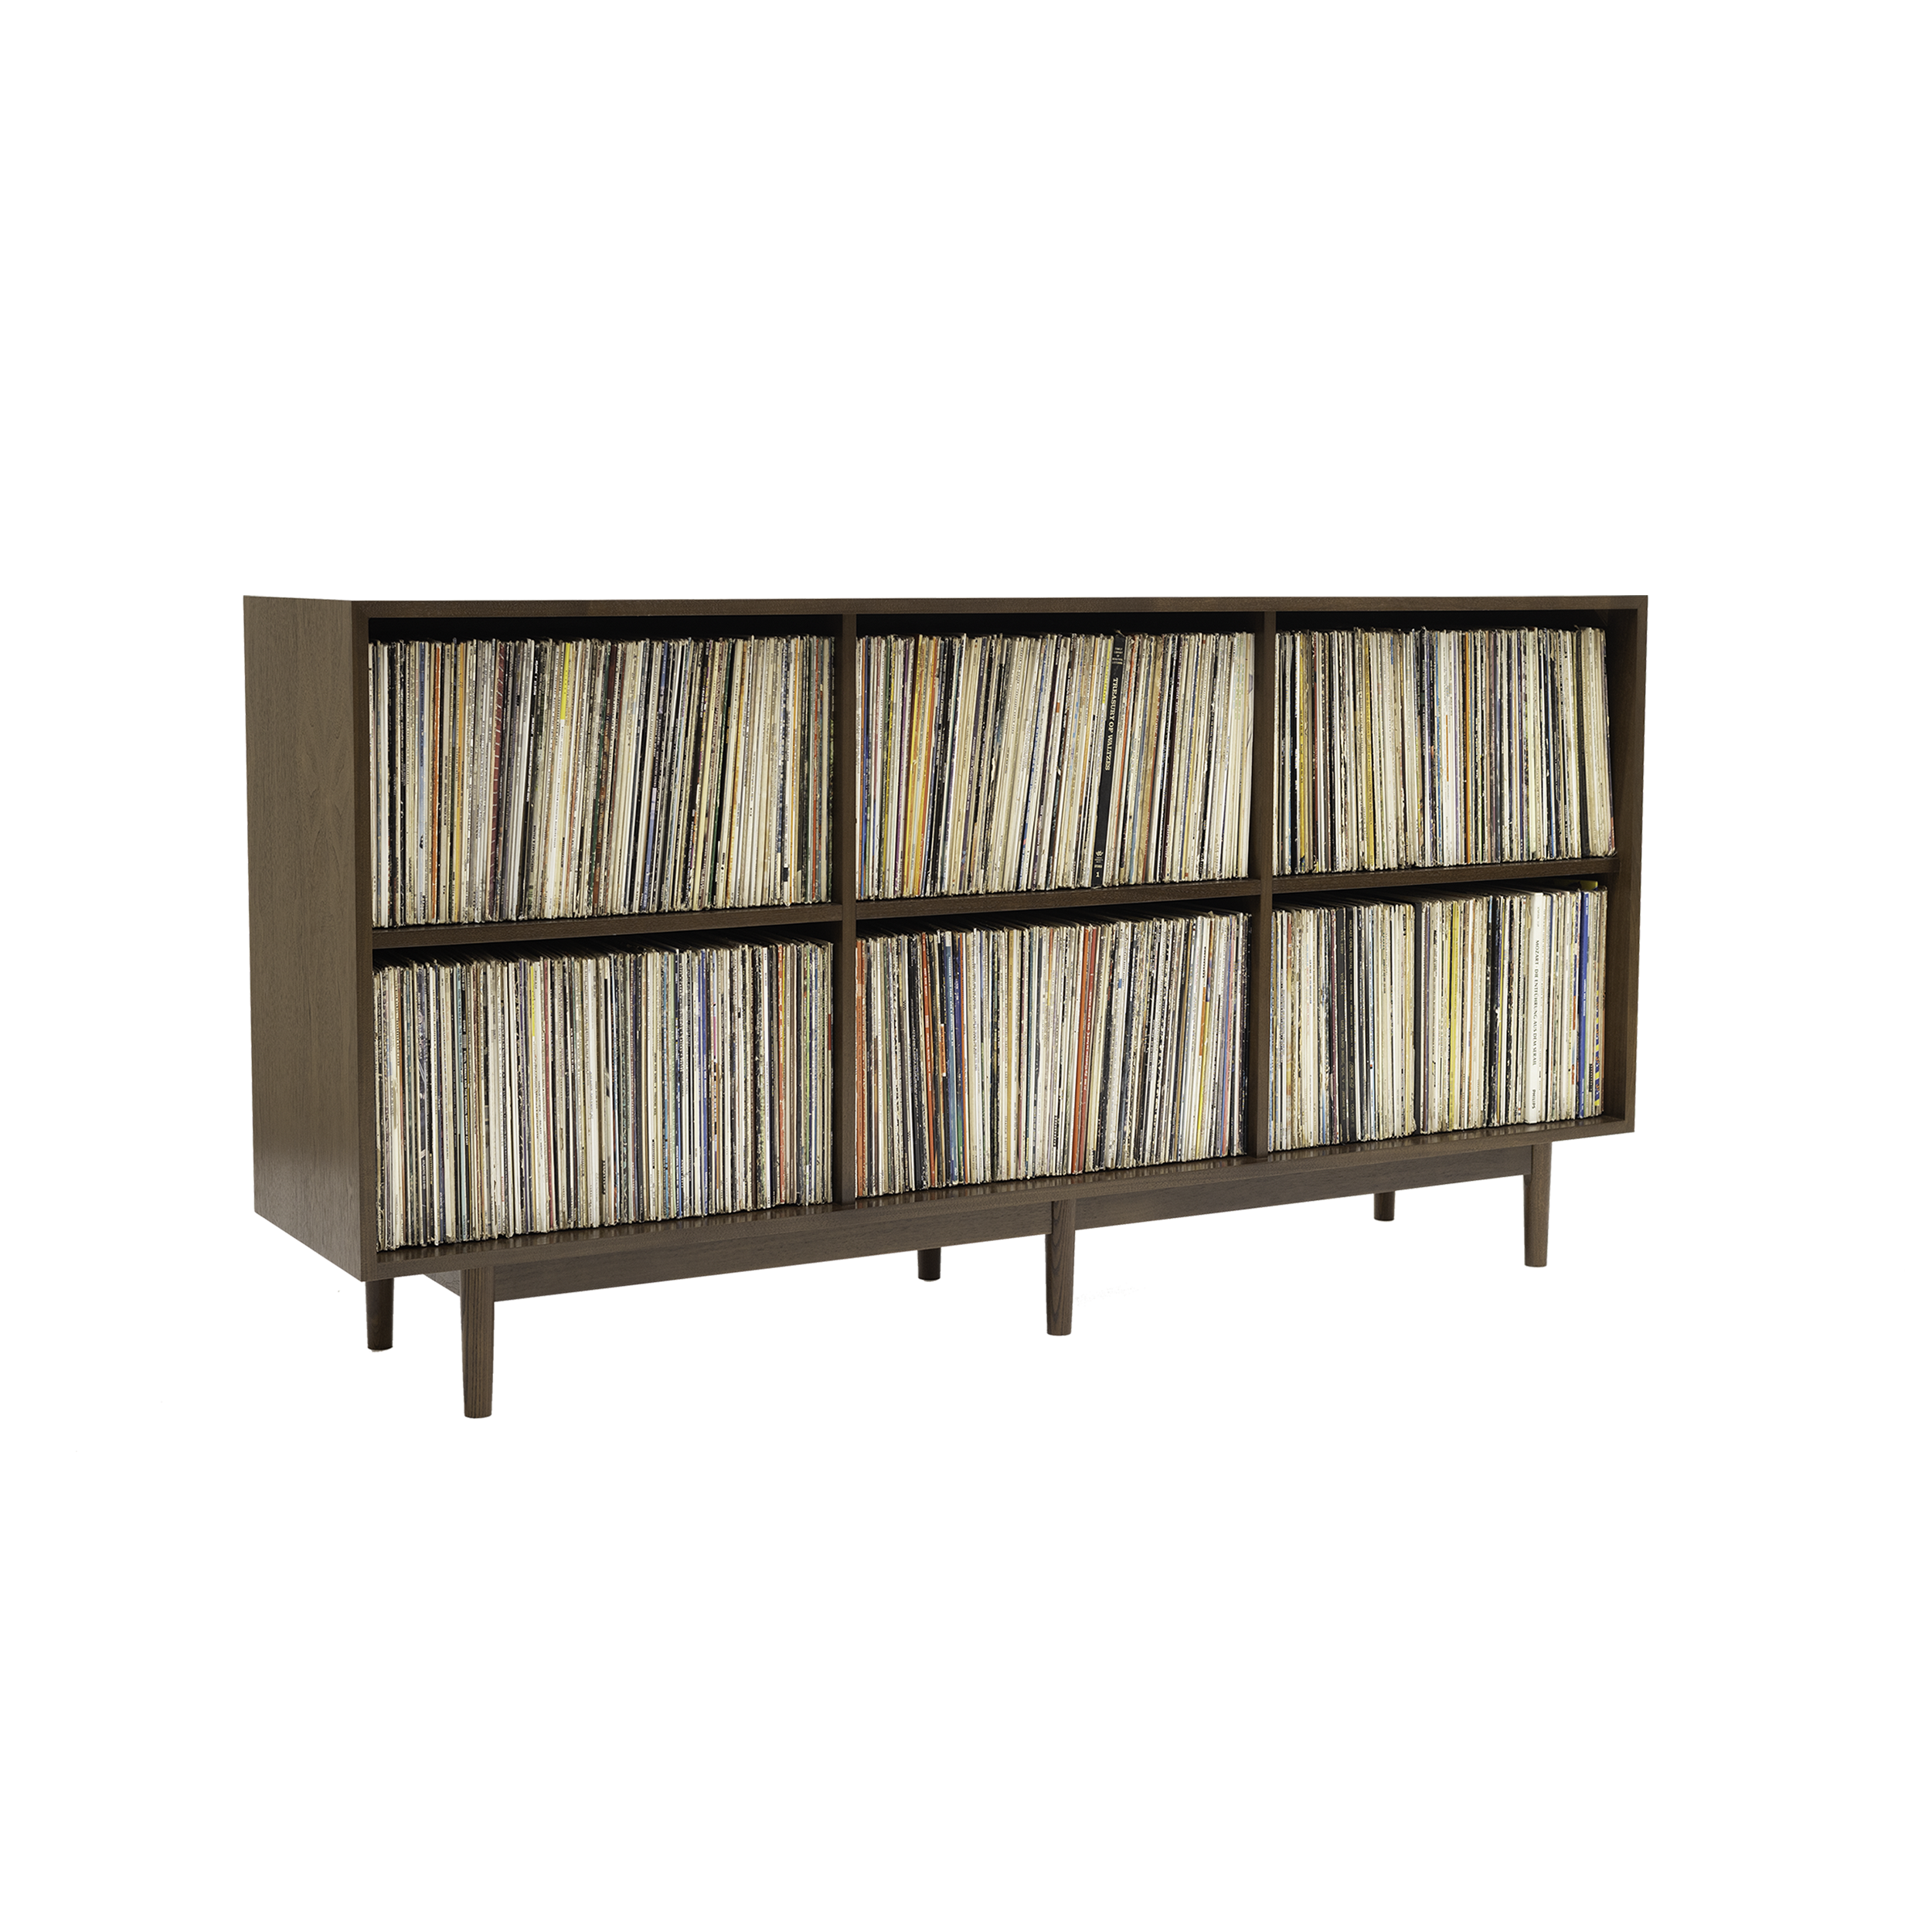 2 x 3 Record Storage Cabinet